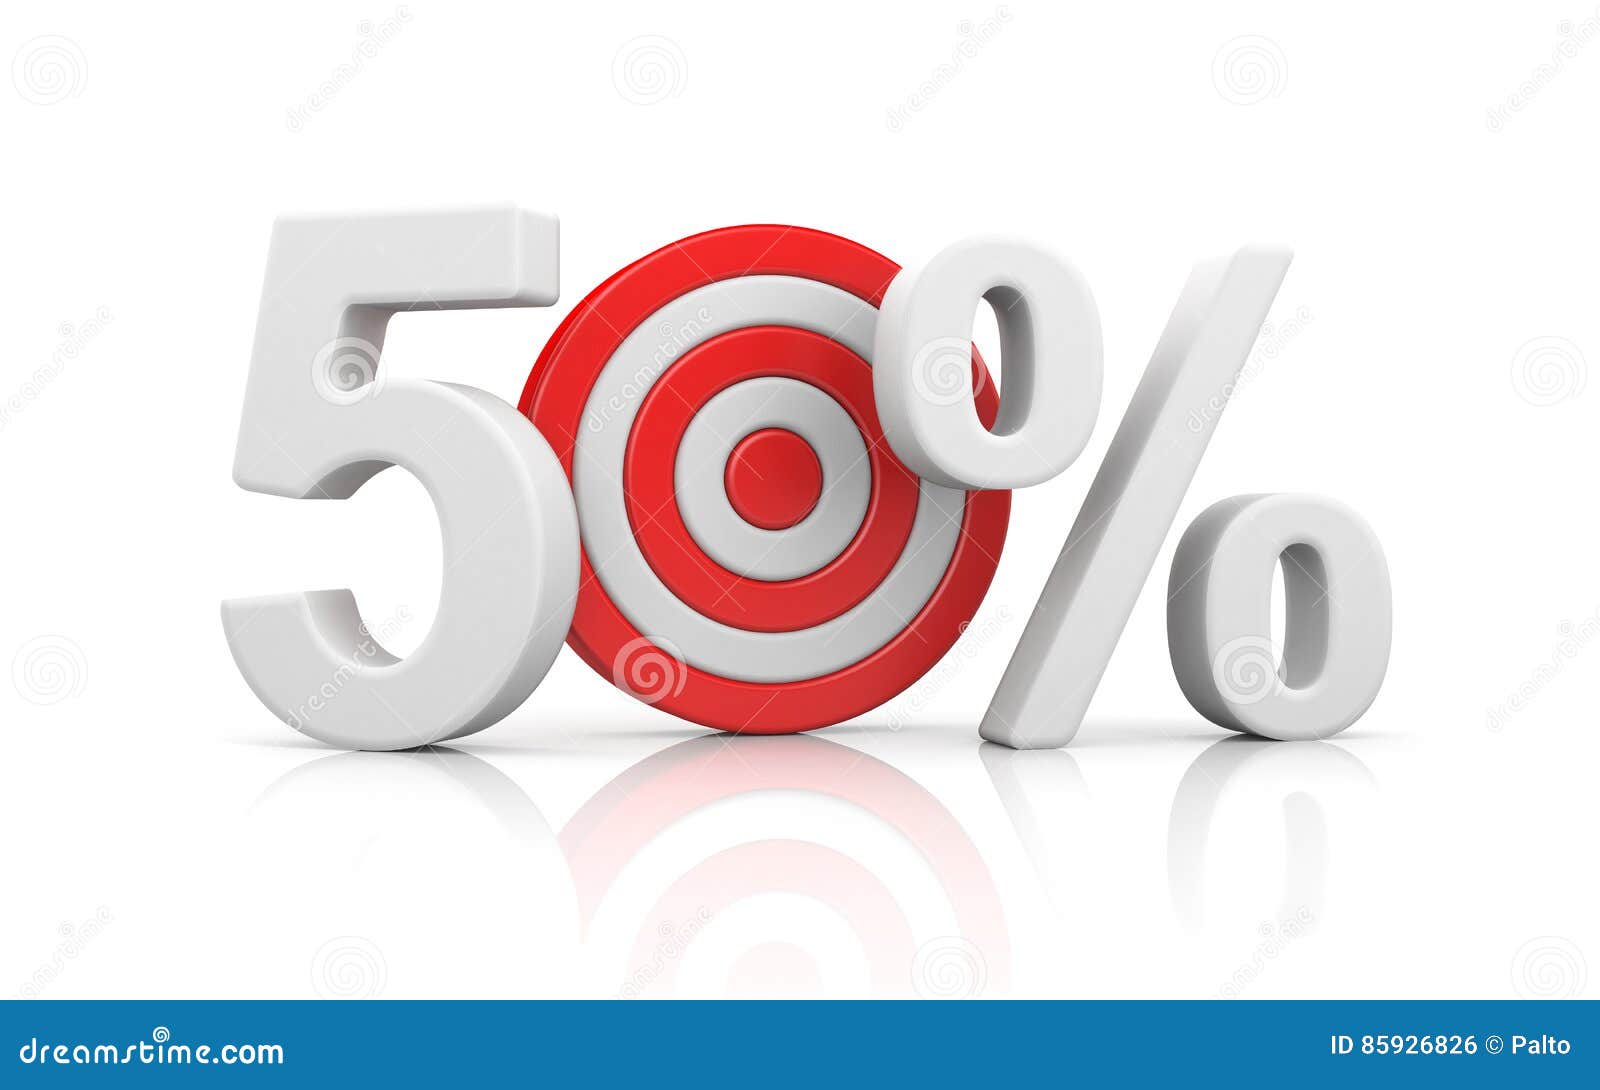 target form the number 50 percent. sale metaphors